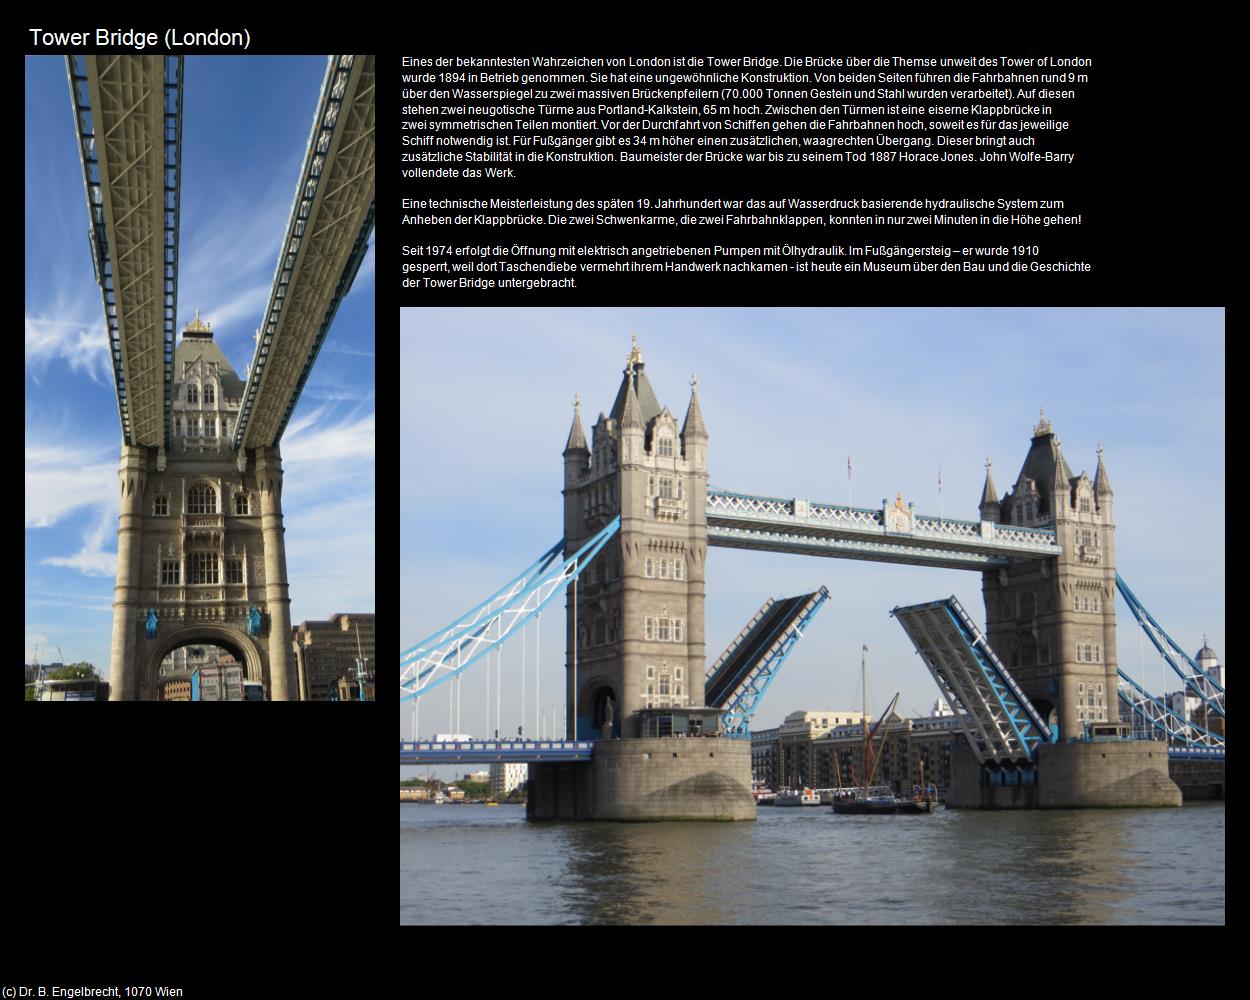 Tower Bridge (London, England) in Kulturatlas-ENGLAND und WALES